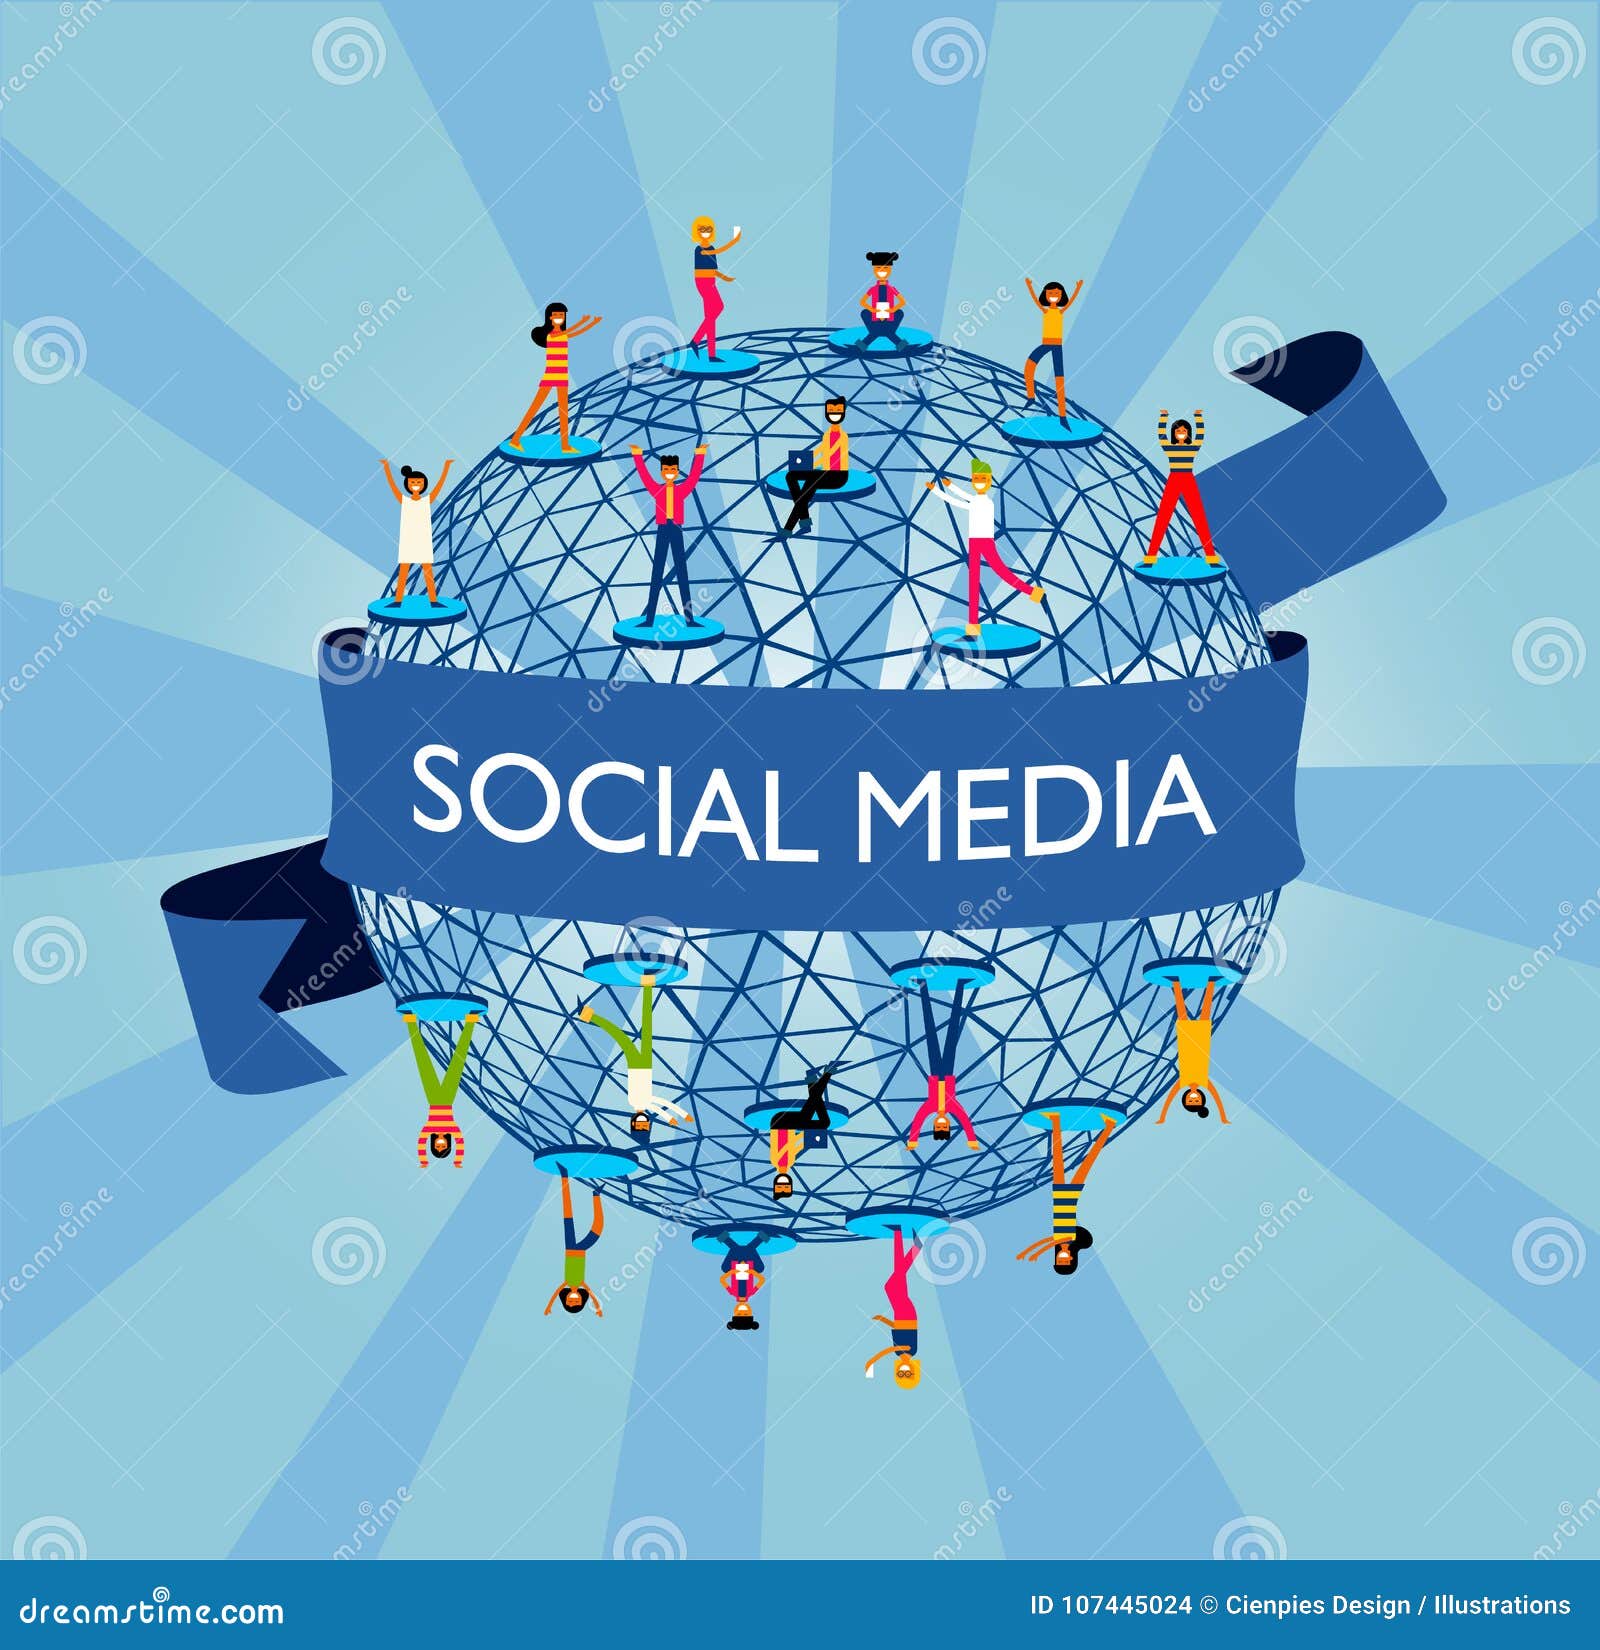 role of social media in globalization